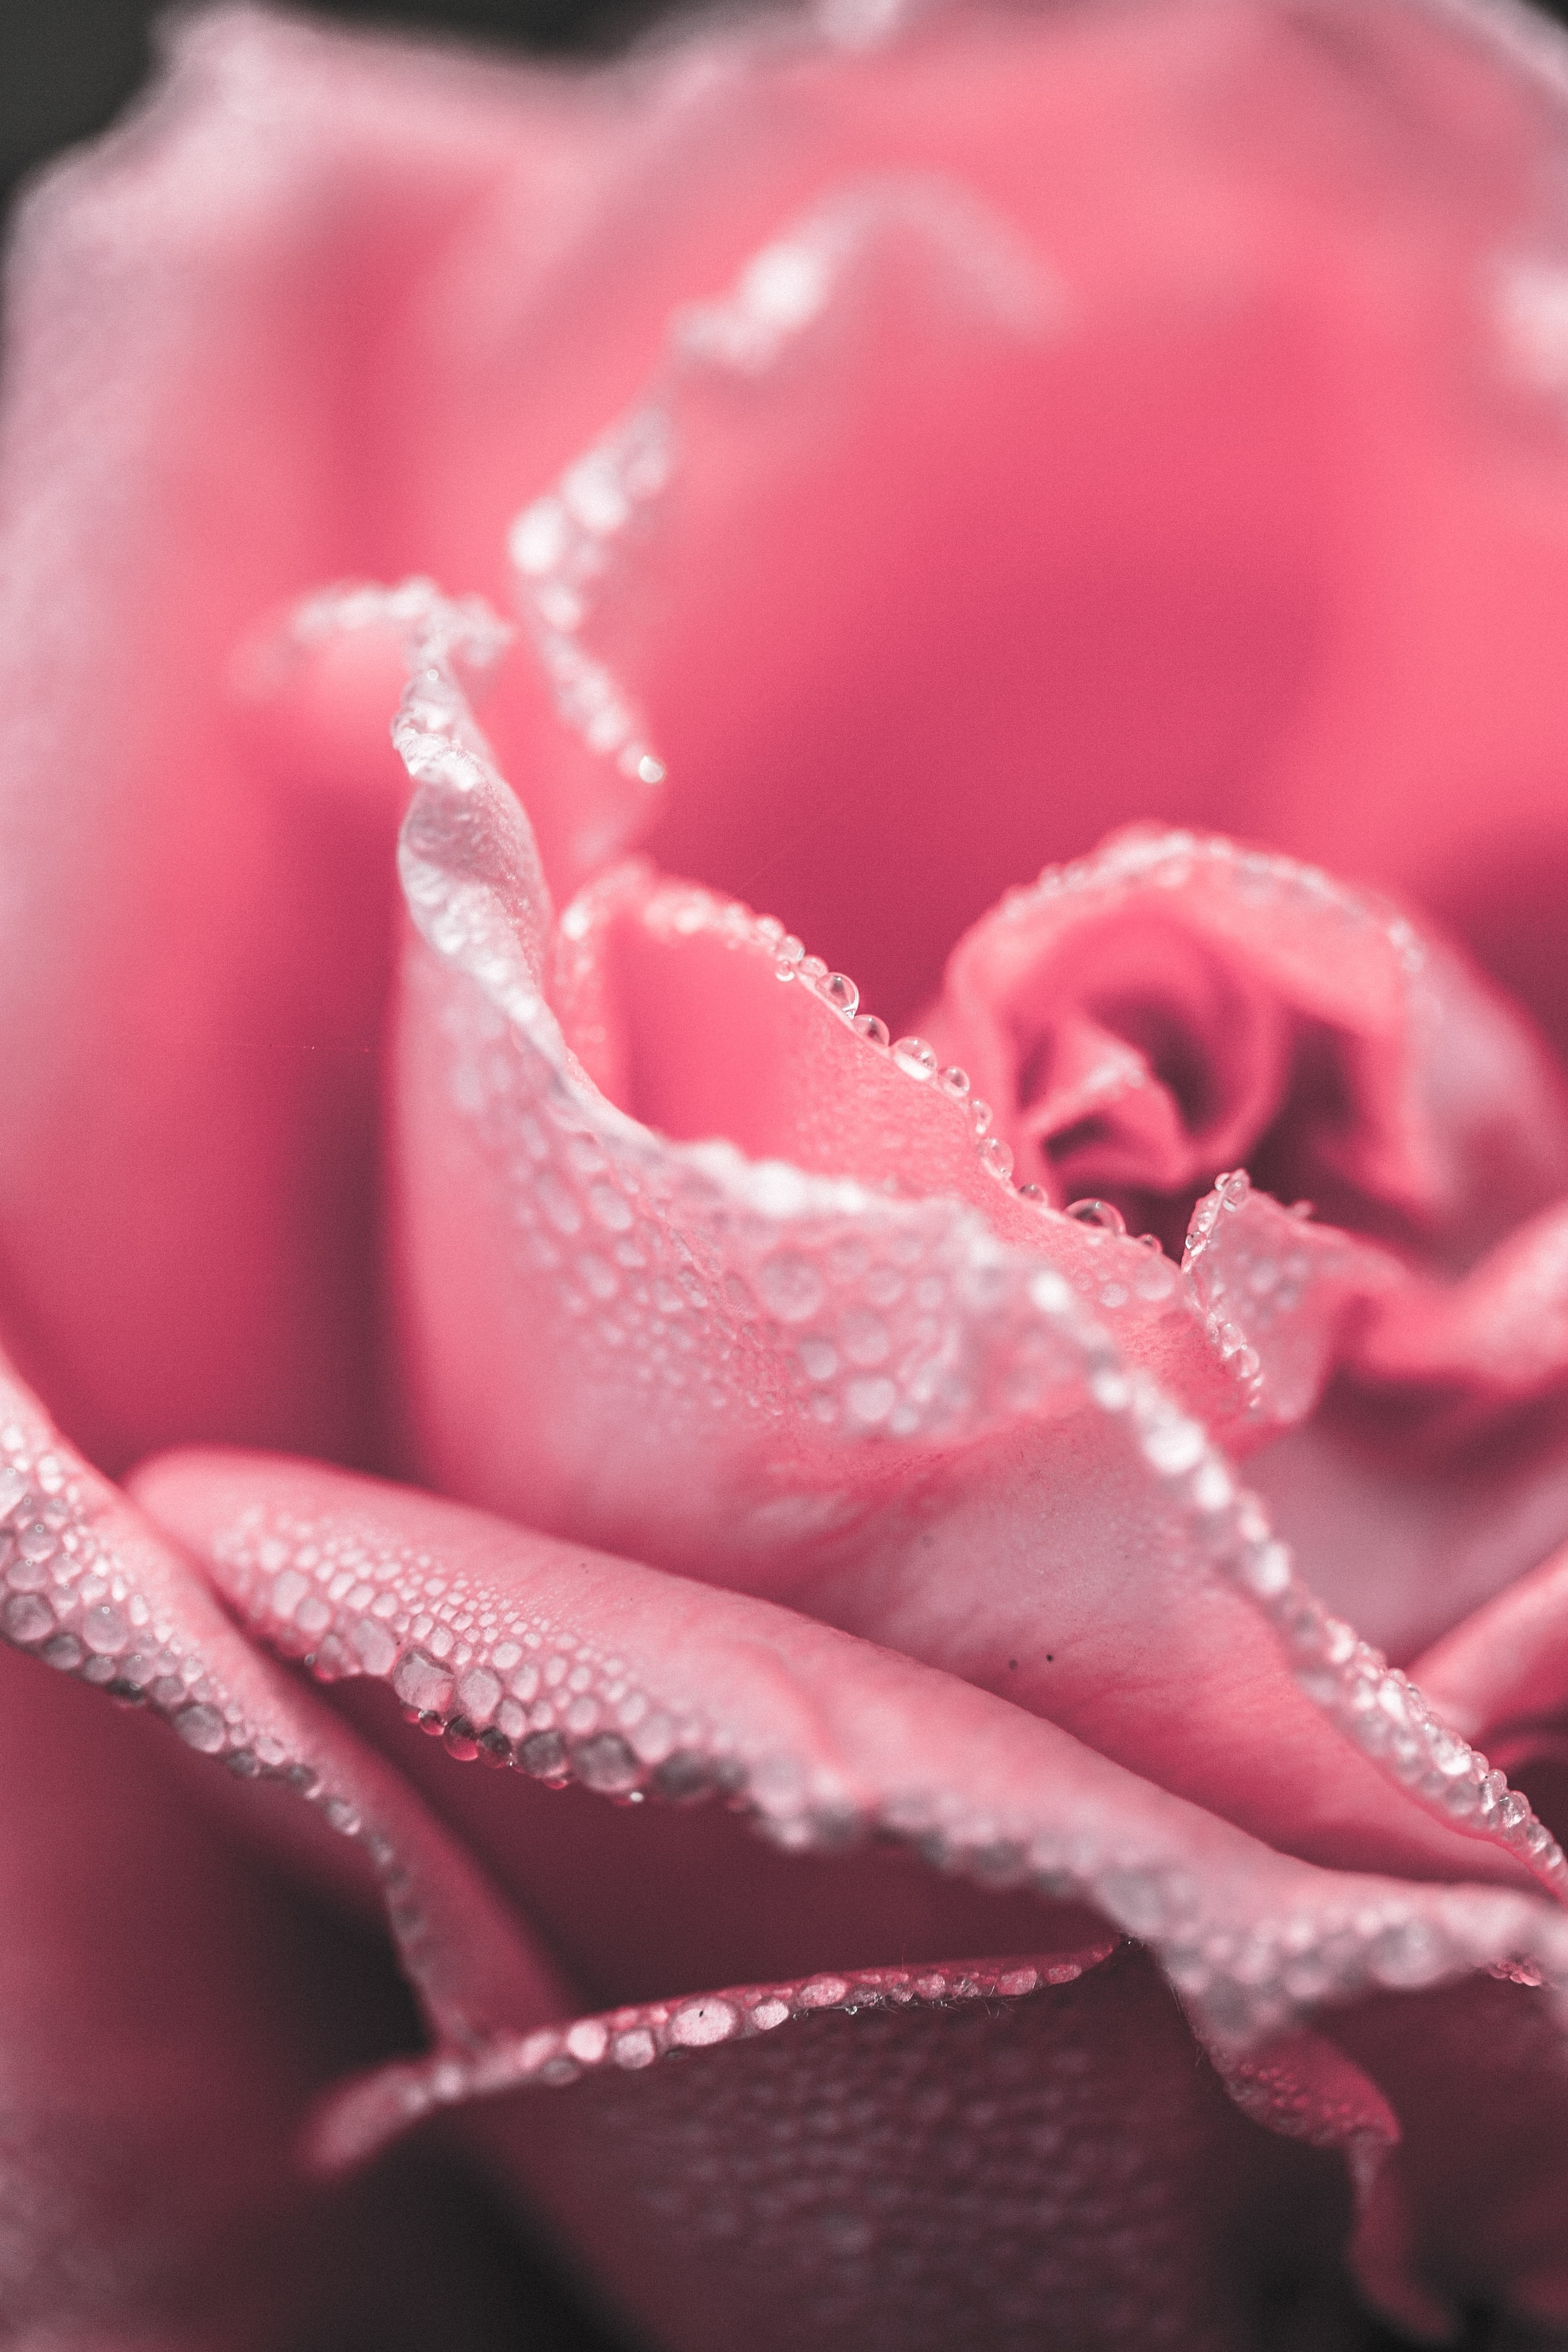 close up photo of pink rose